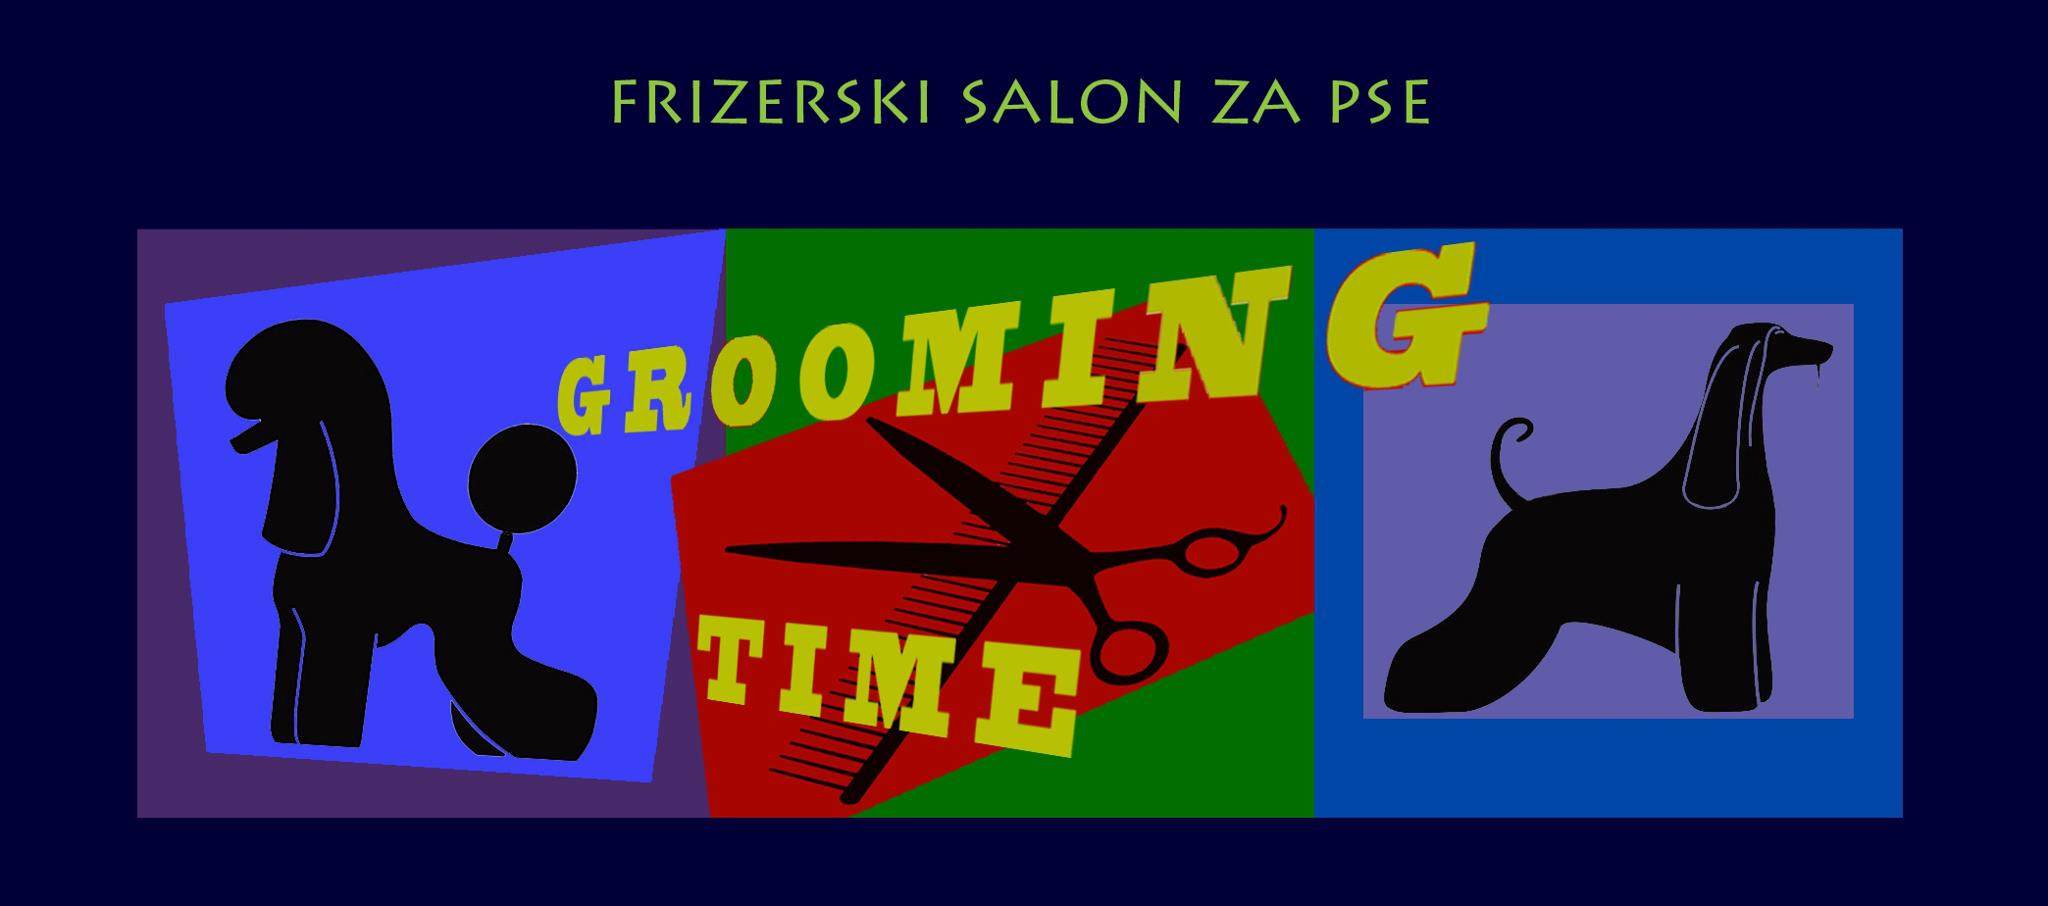 Grooming time - Šišanje - Frizer